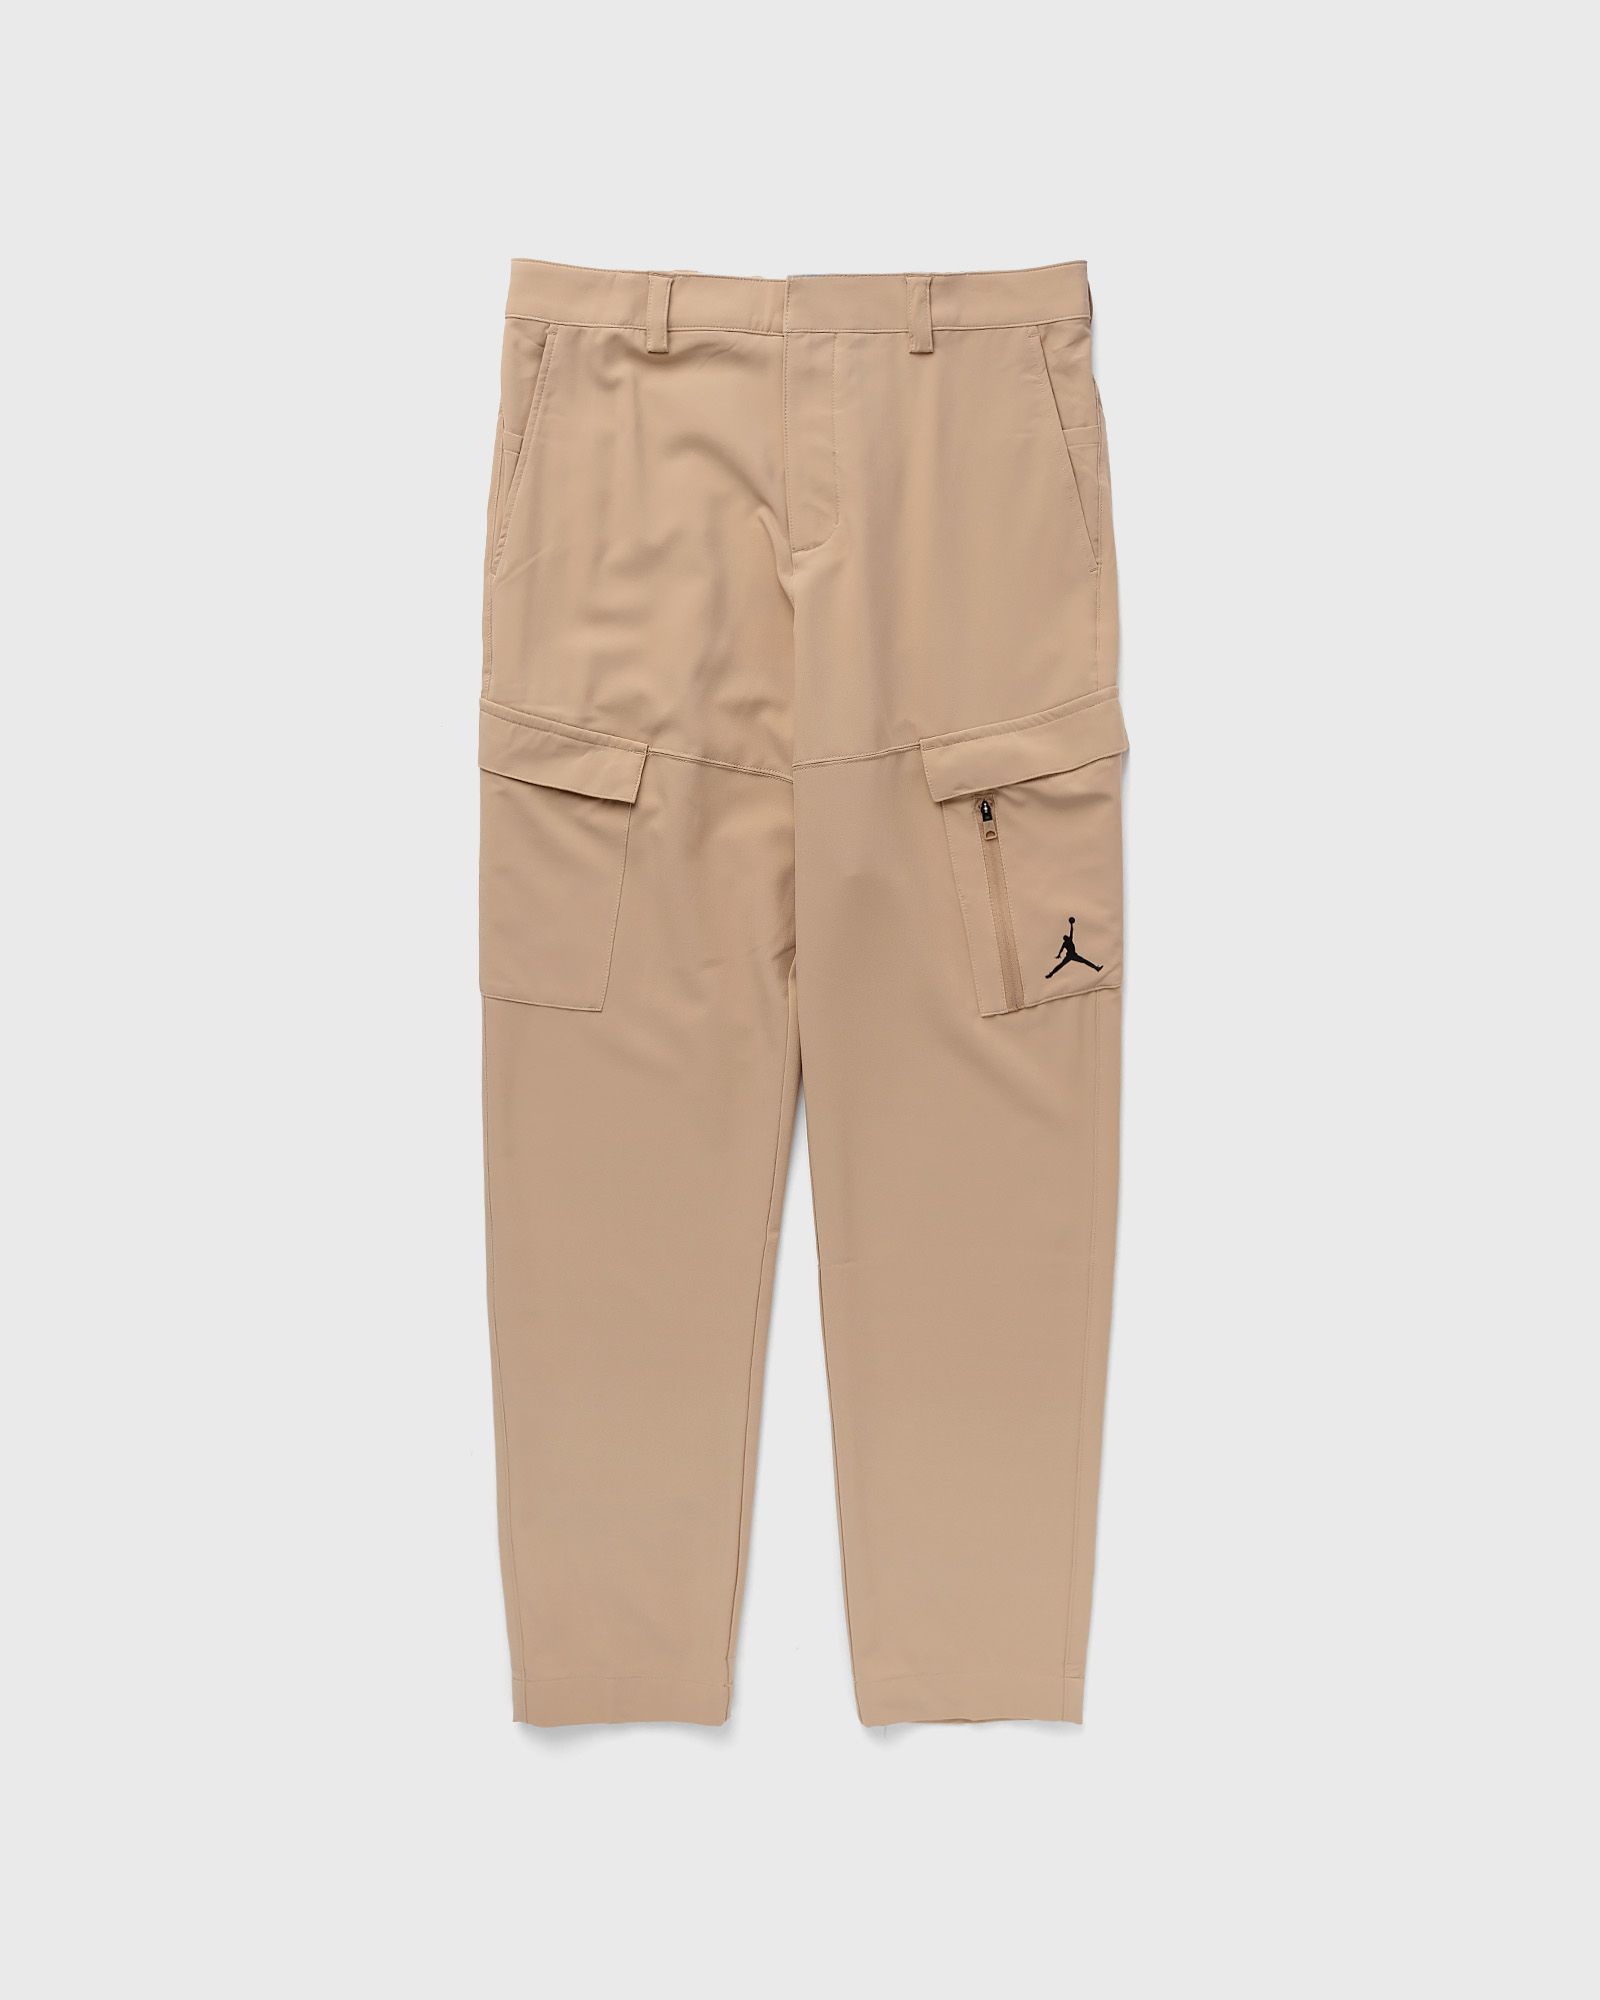 Jordan - golf pants men cargo pants brown in größe:3xl